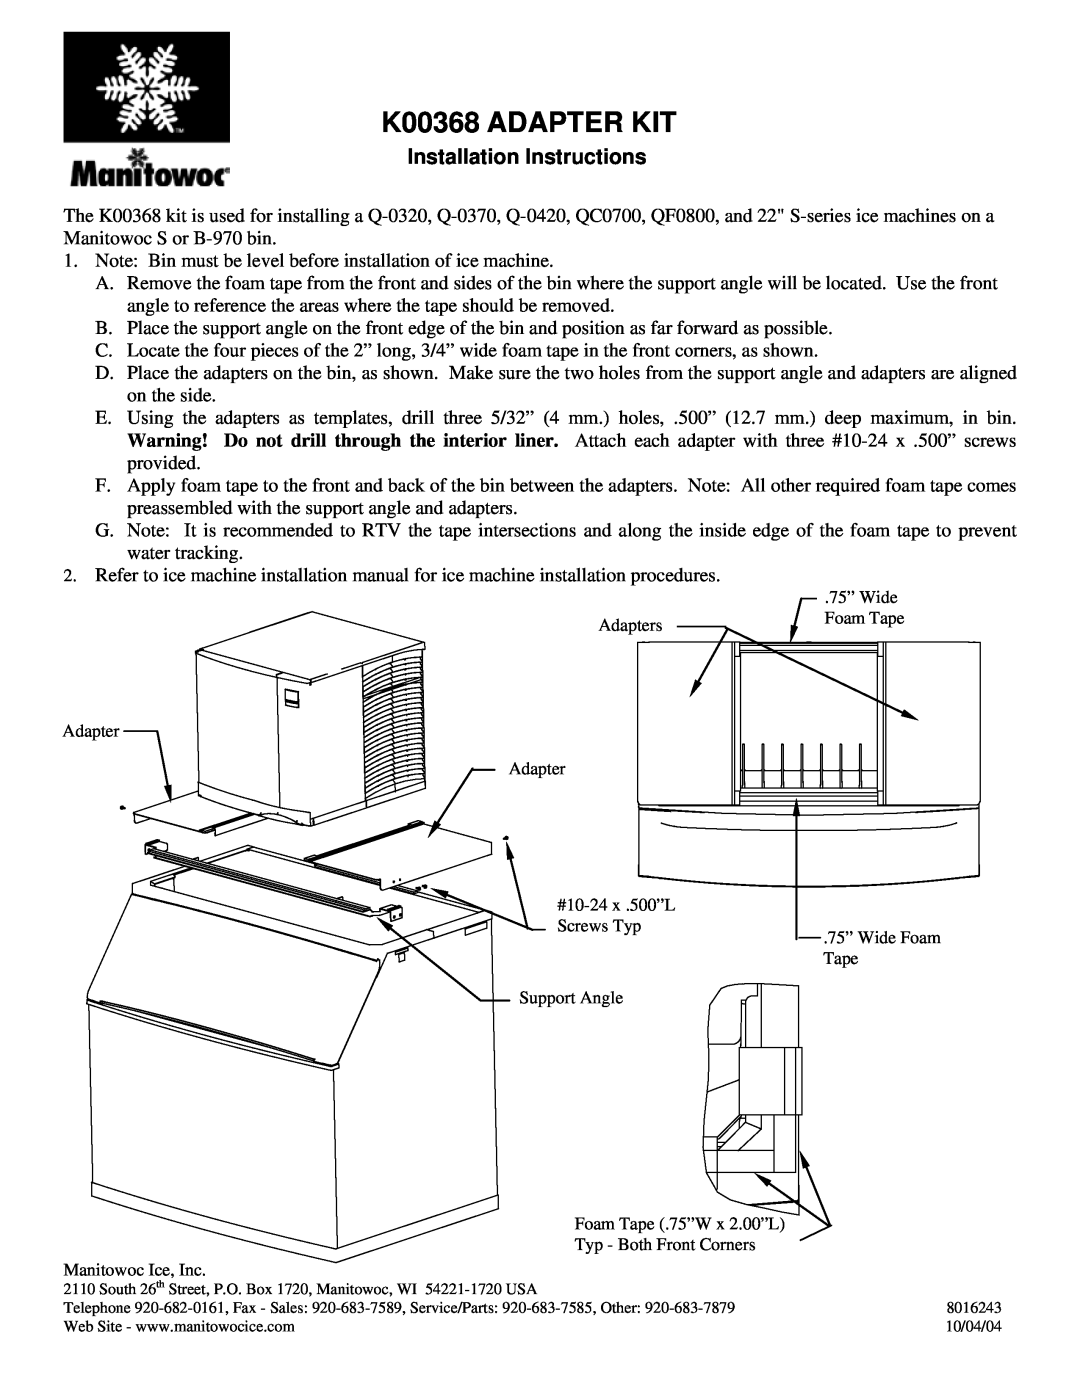 Manitowoc Ice installation instructions K00368 ADAPTER KIT, Installation Instructions 